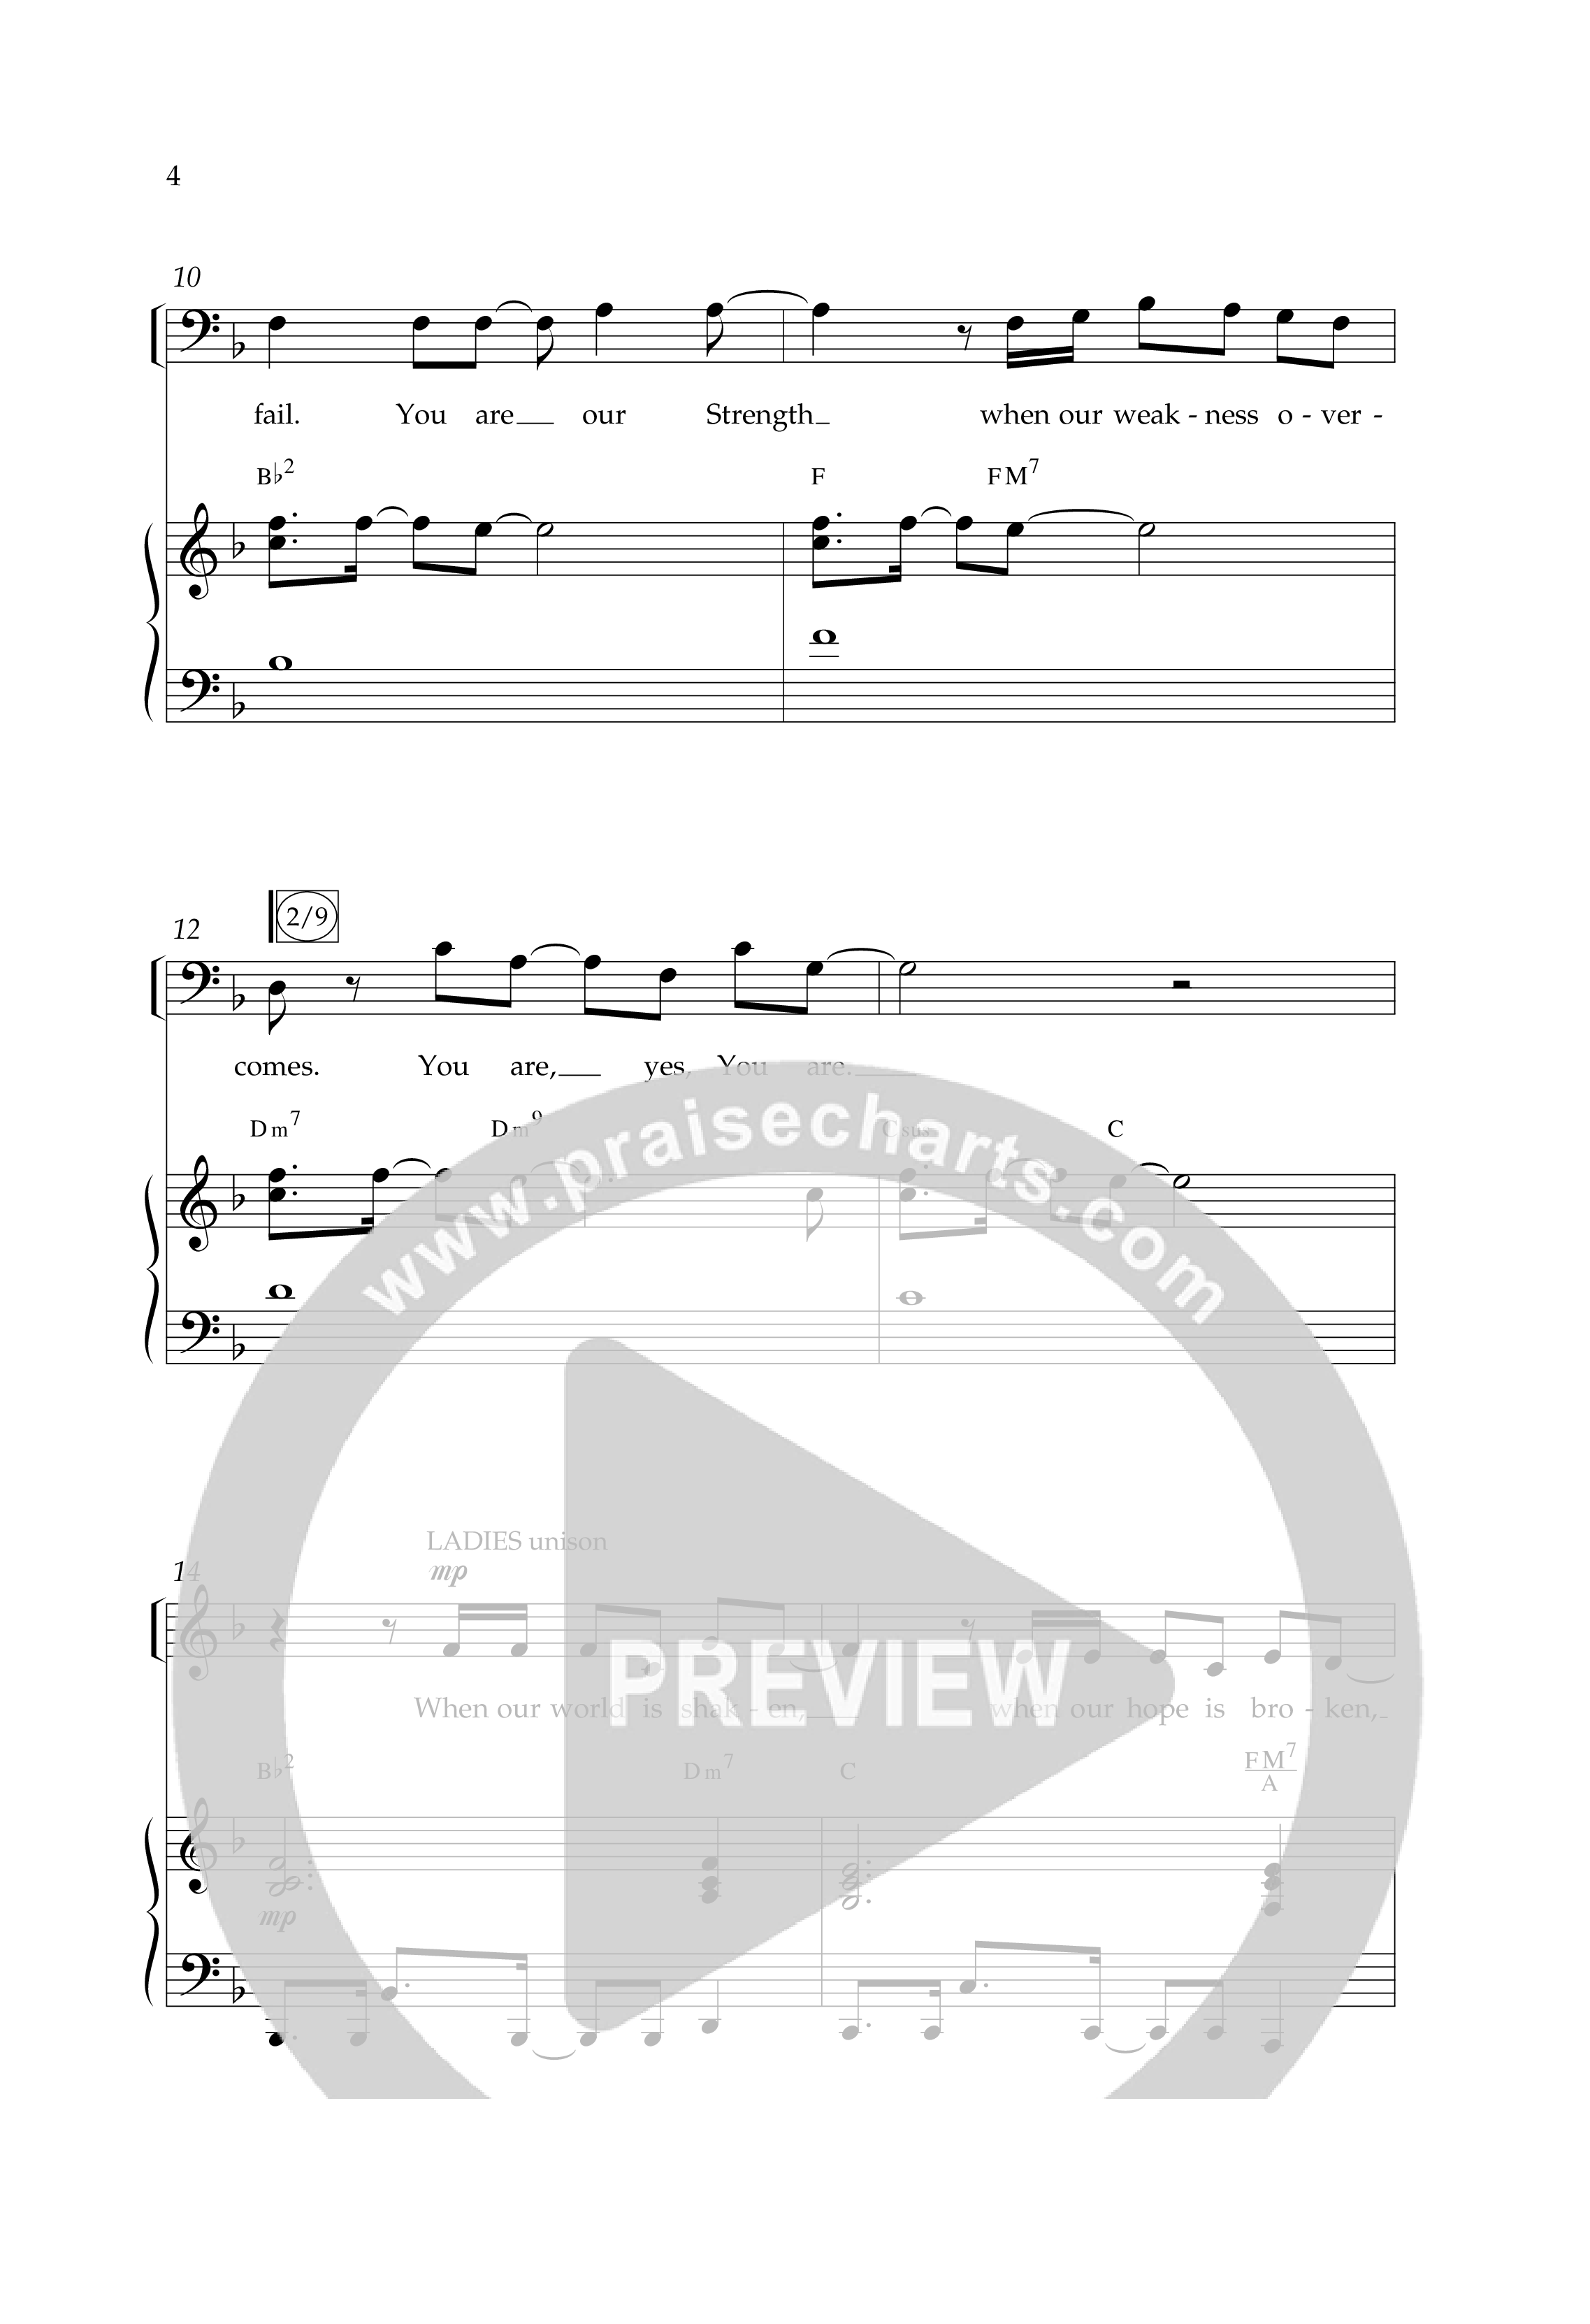 You Amaze Us (Choral Anthem SATB) Anthem (SATB/Piano) (Lifeway Choral / Arr. Danny Mitchell)